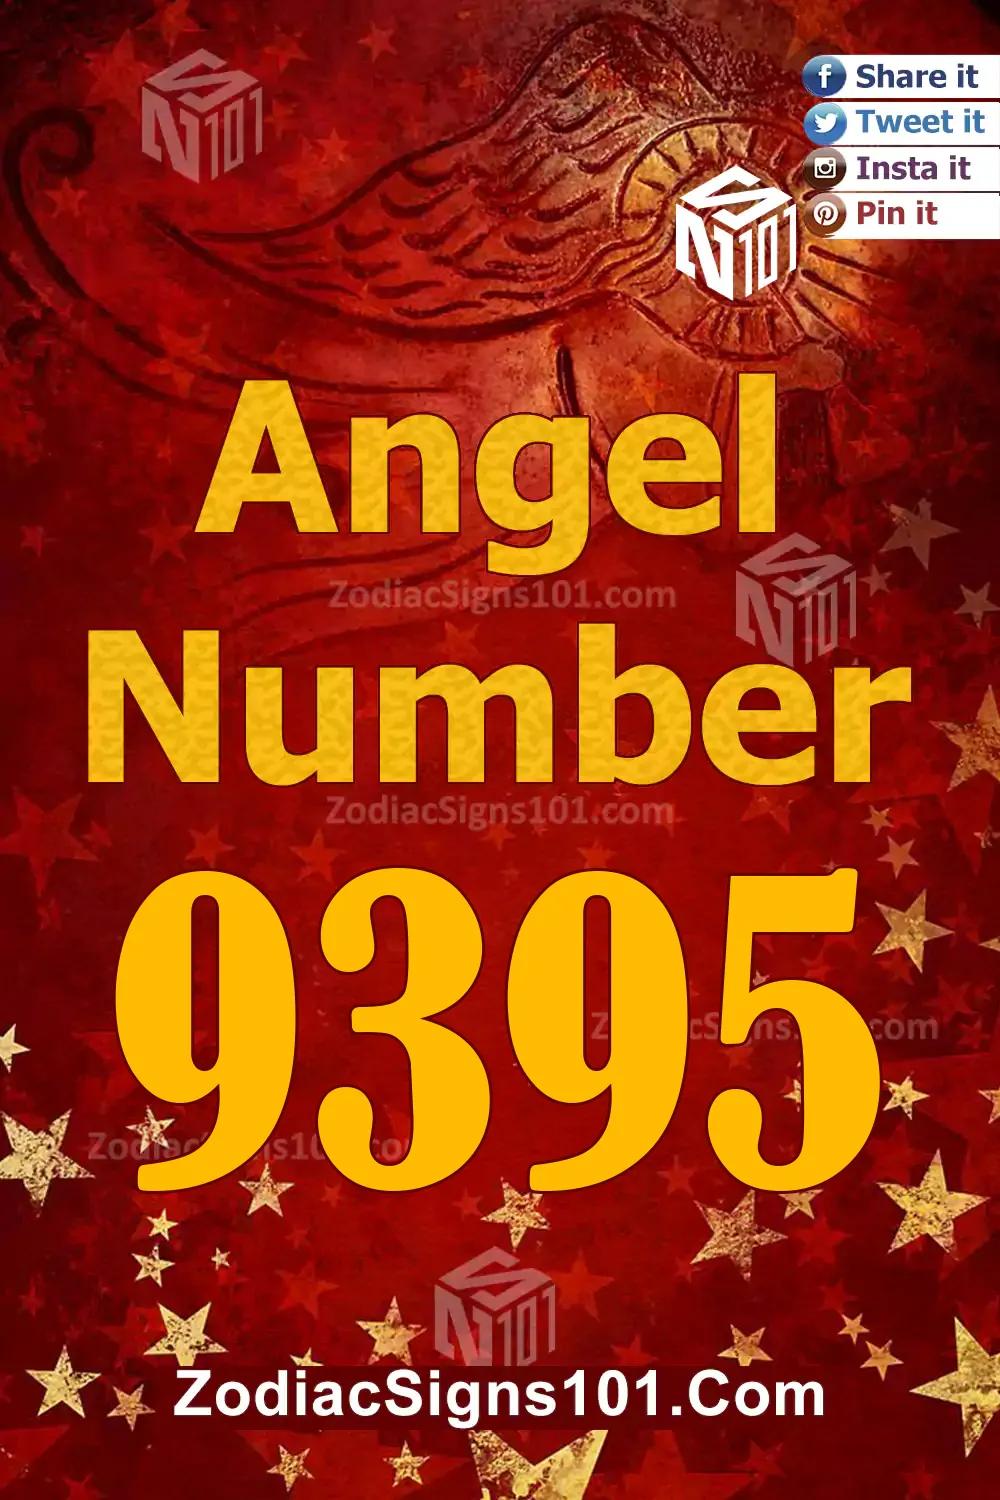 9395-Angel-Number-Meaning.jpg